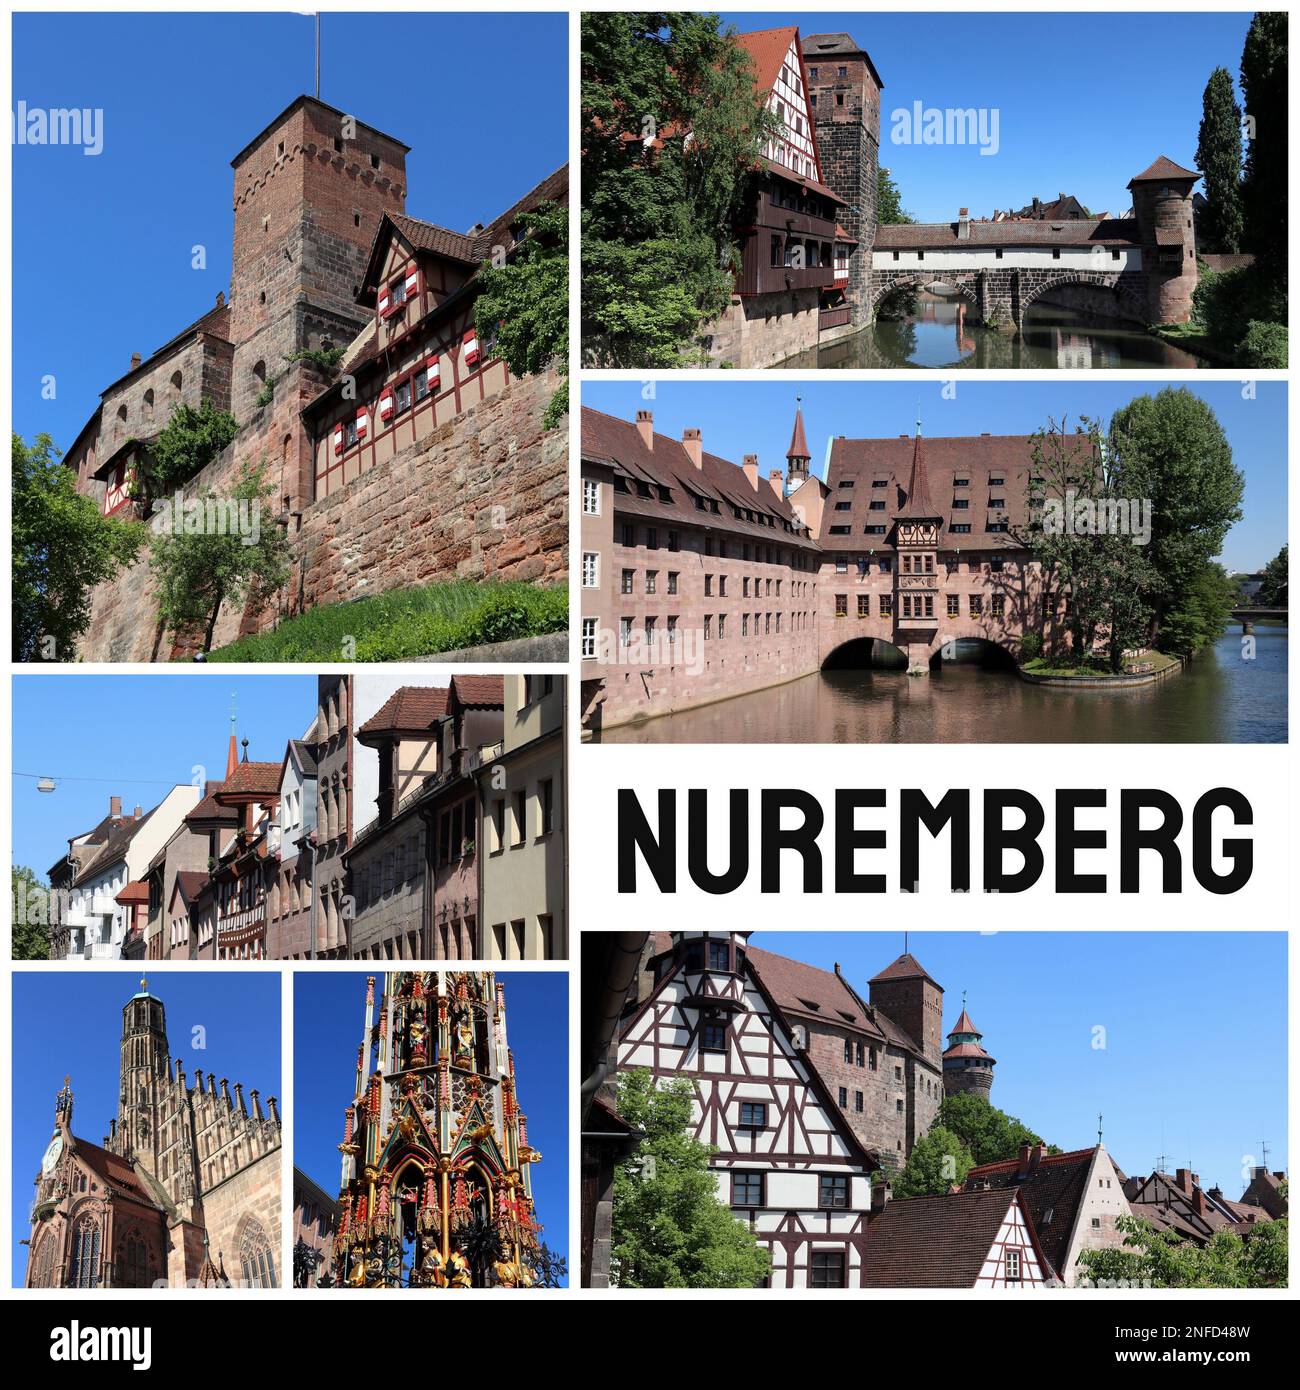 Nuremberg, Germany postcard - travel place landmark photo collage. Stock Photo